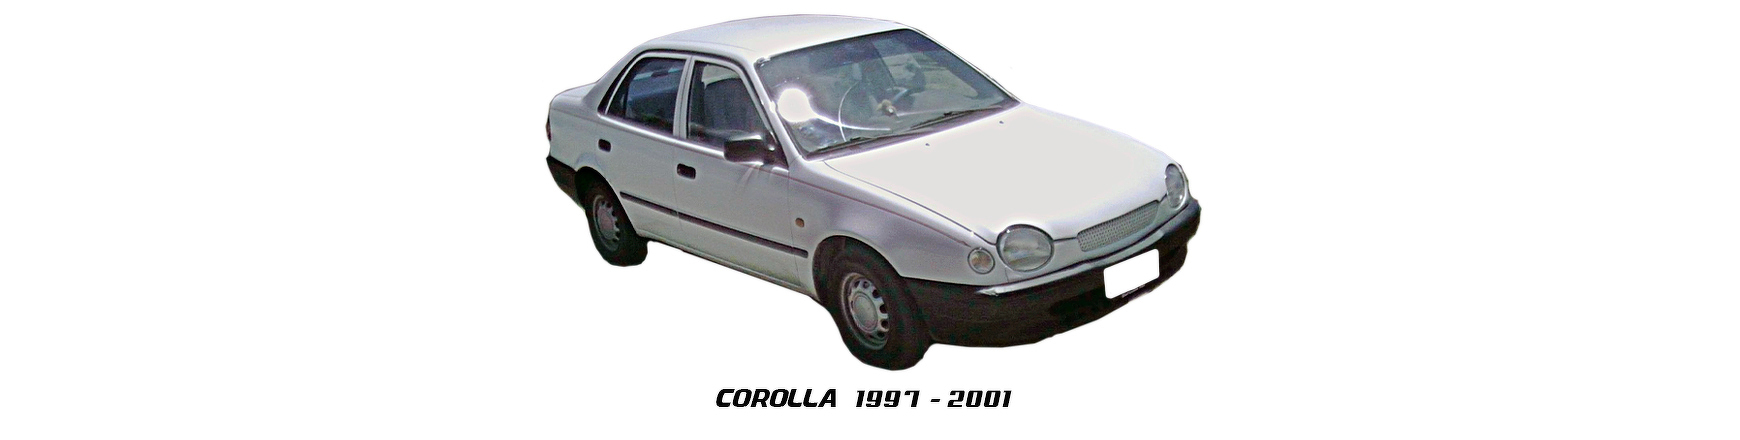 toyota corolla 1999 2000 2001